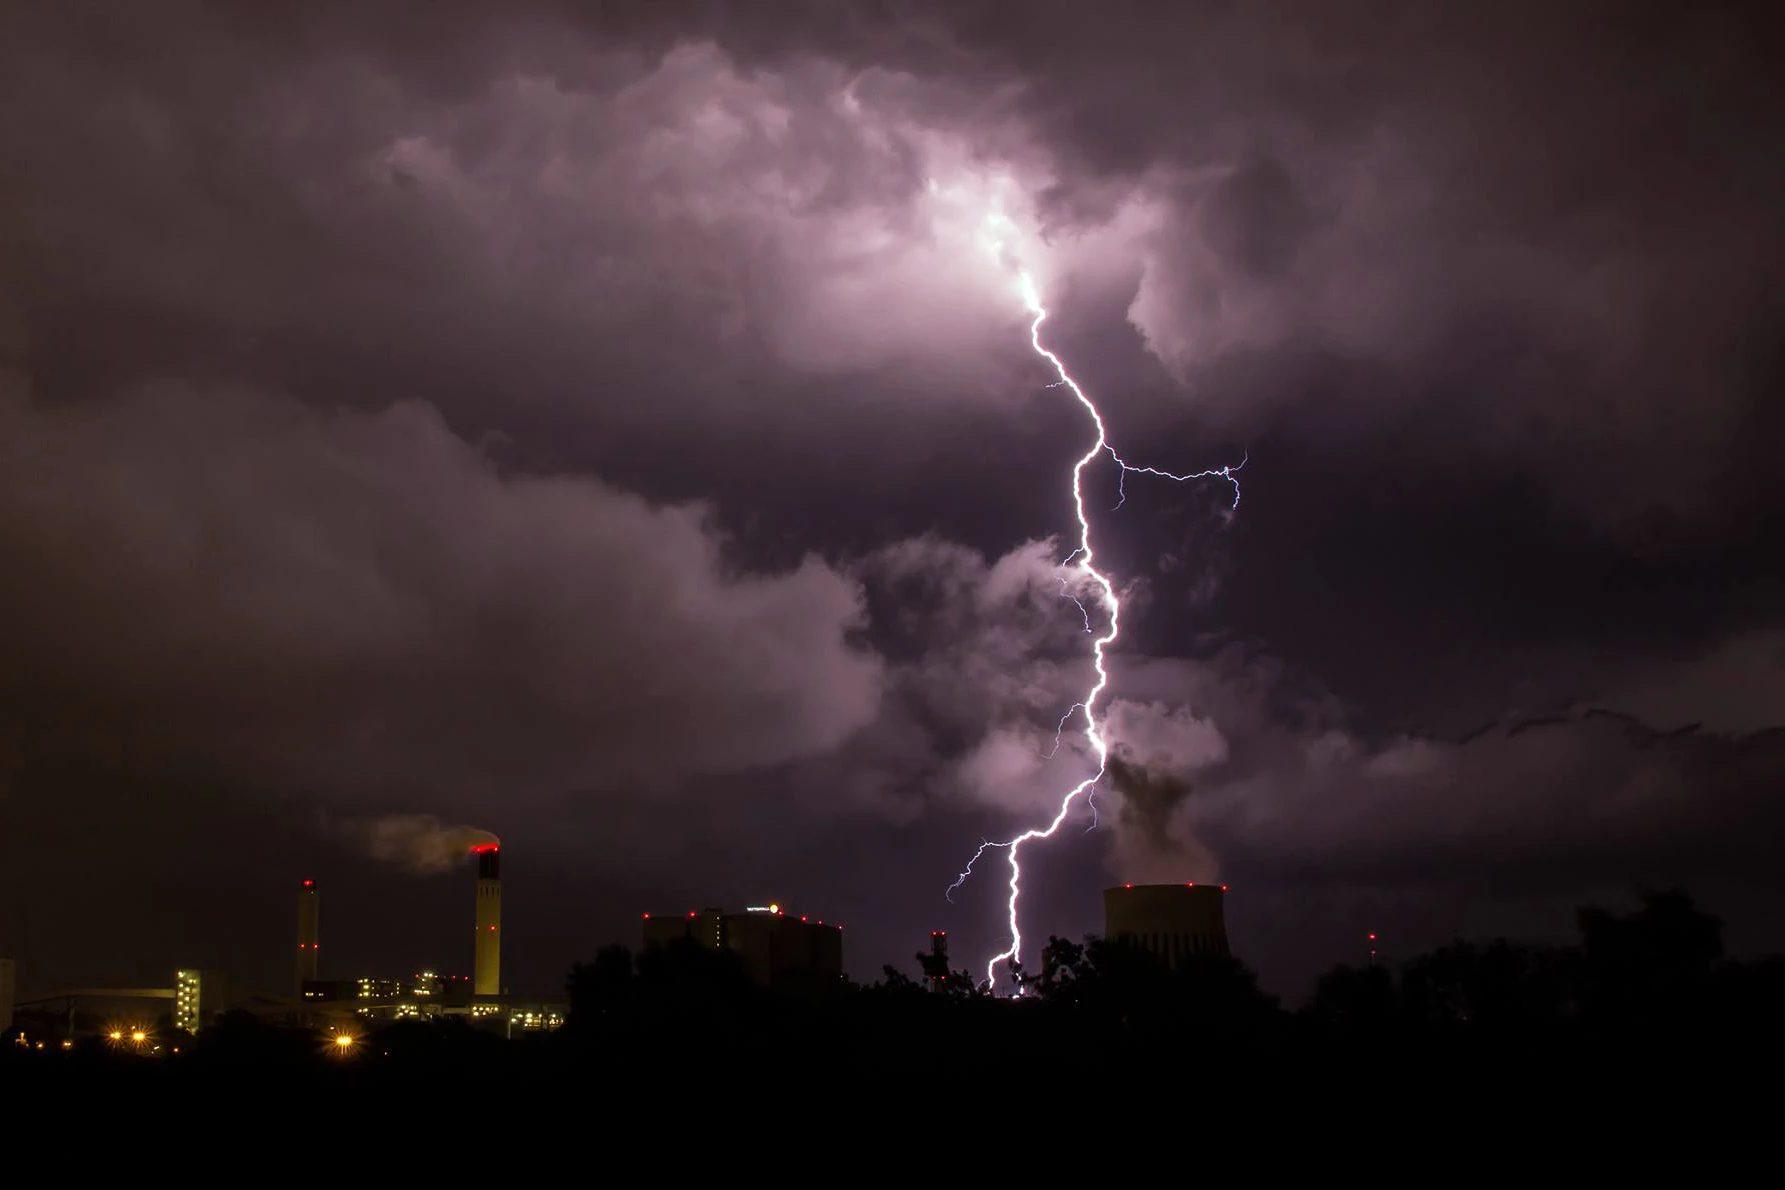 Lightning striking over a city at night.